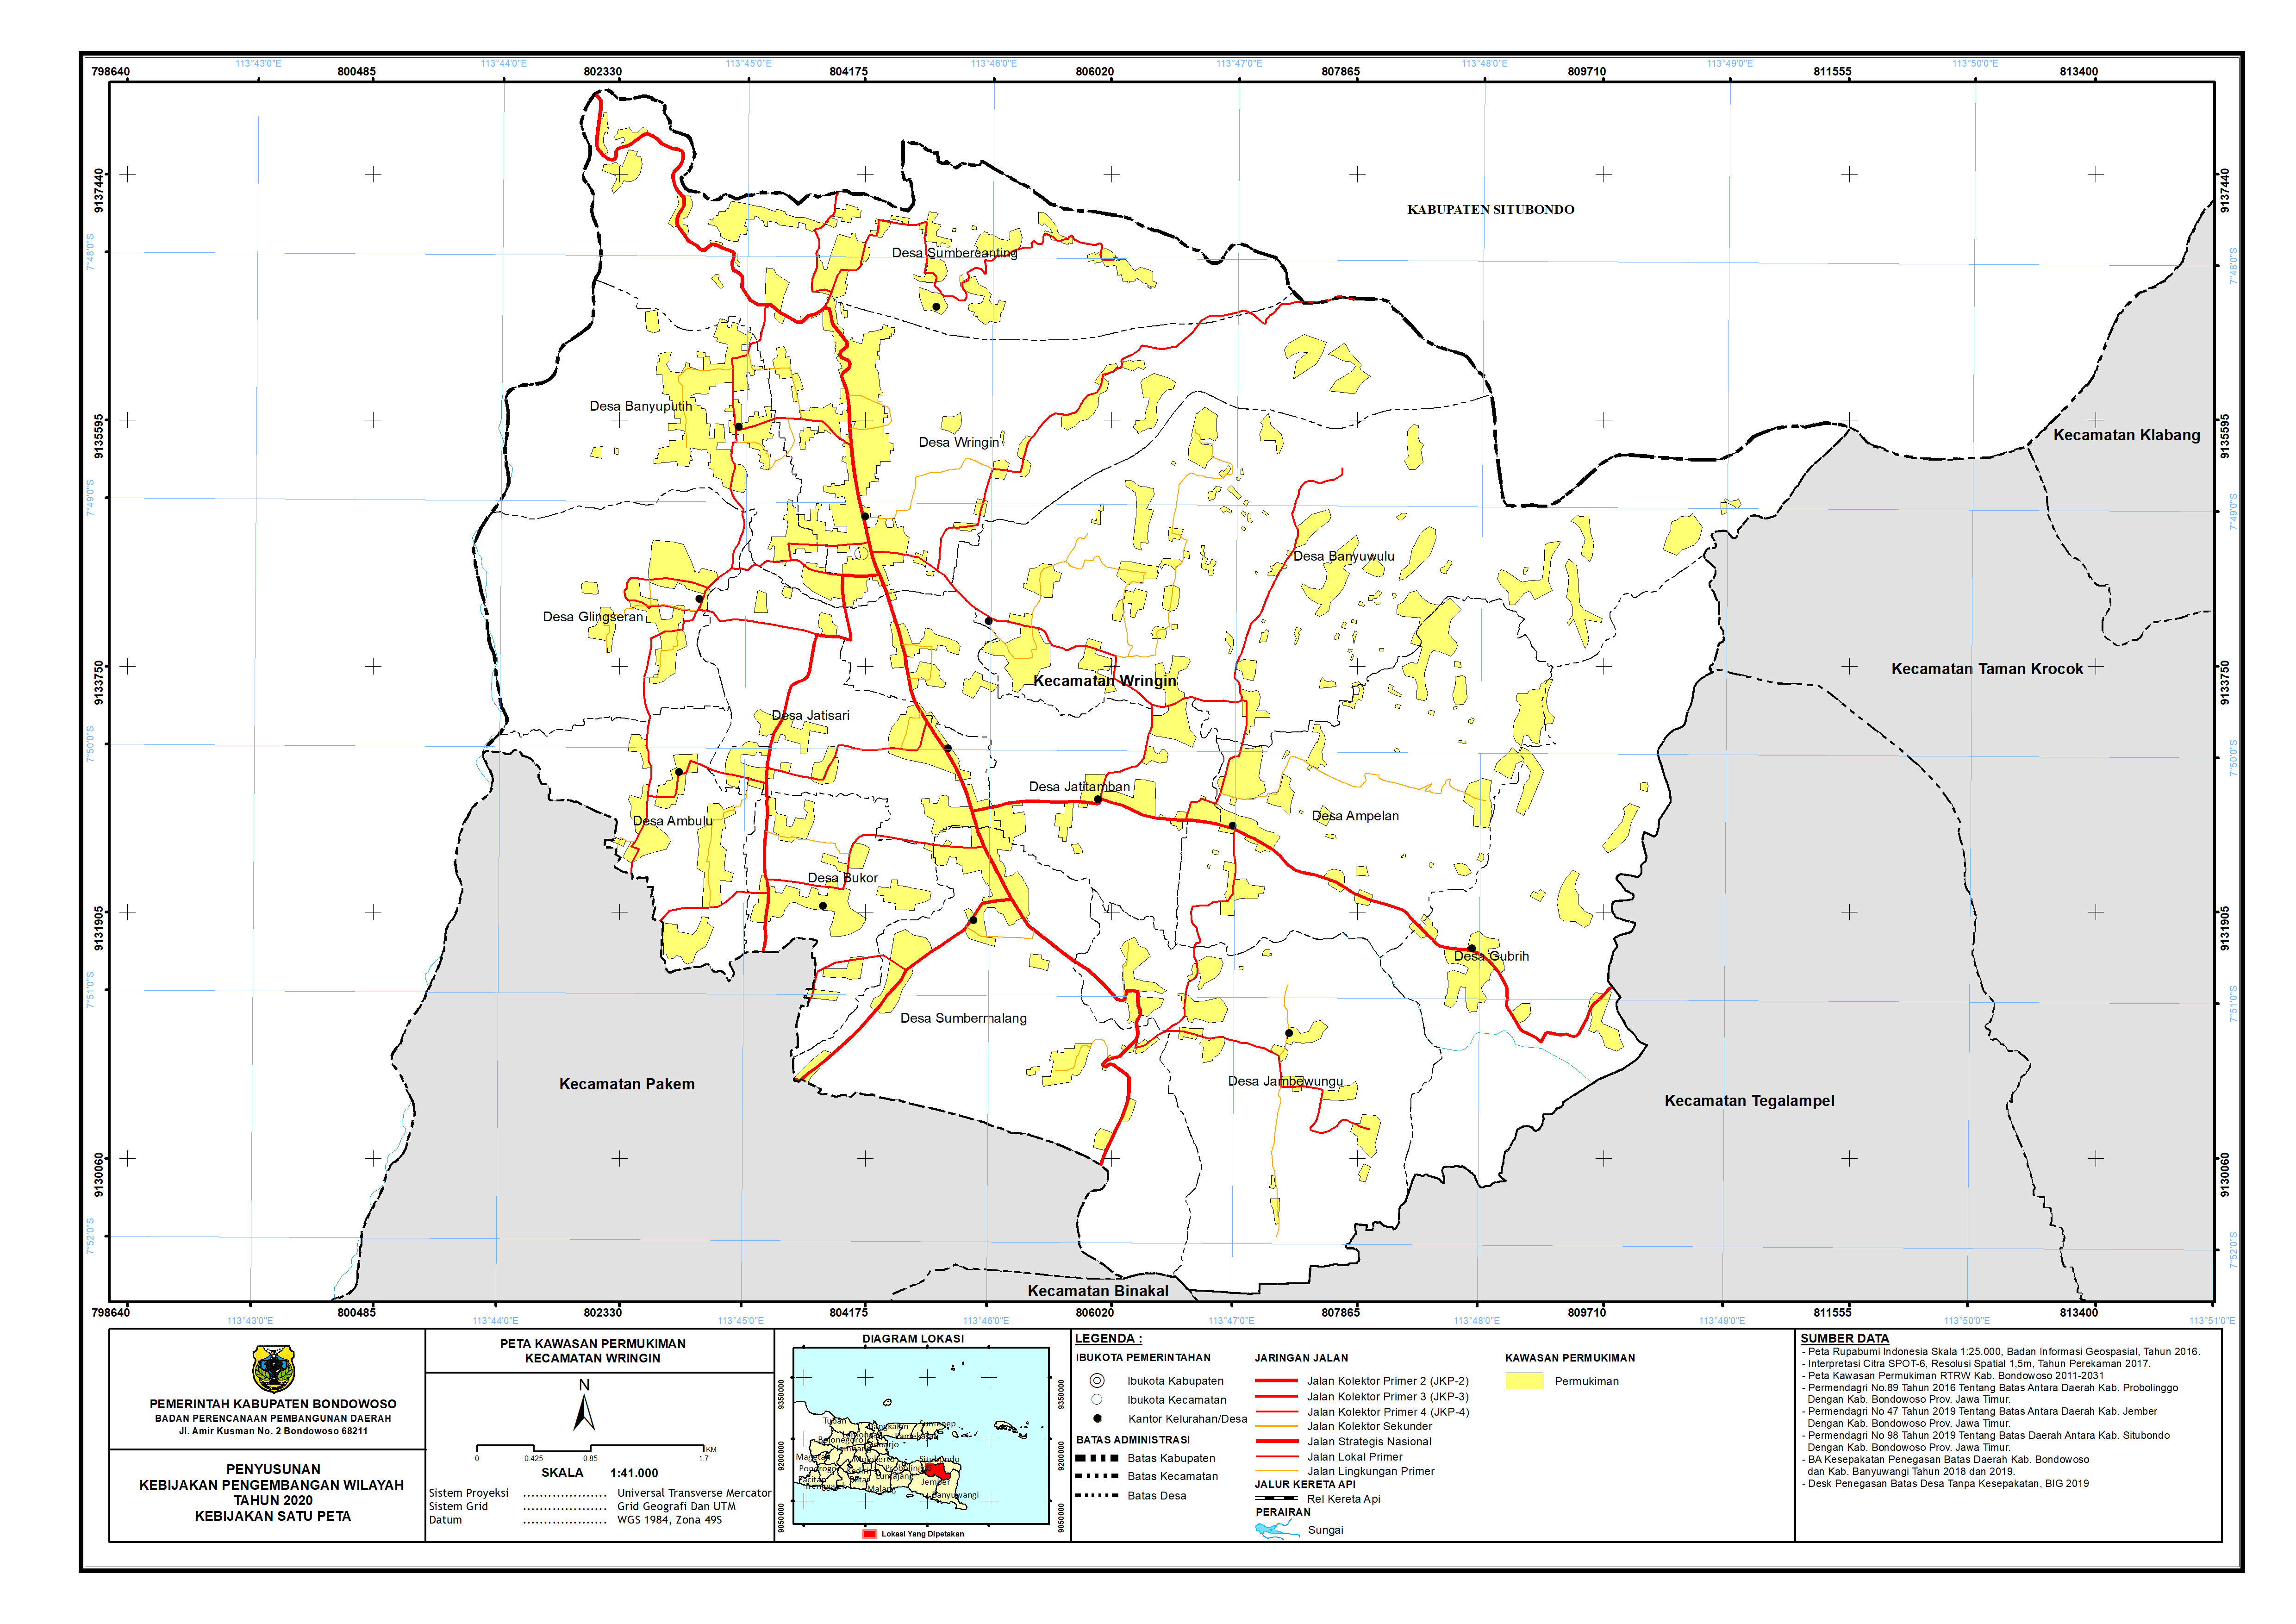 Peta Kawasan Permukiman Kecamatan Wringin.png